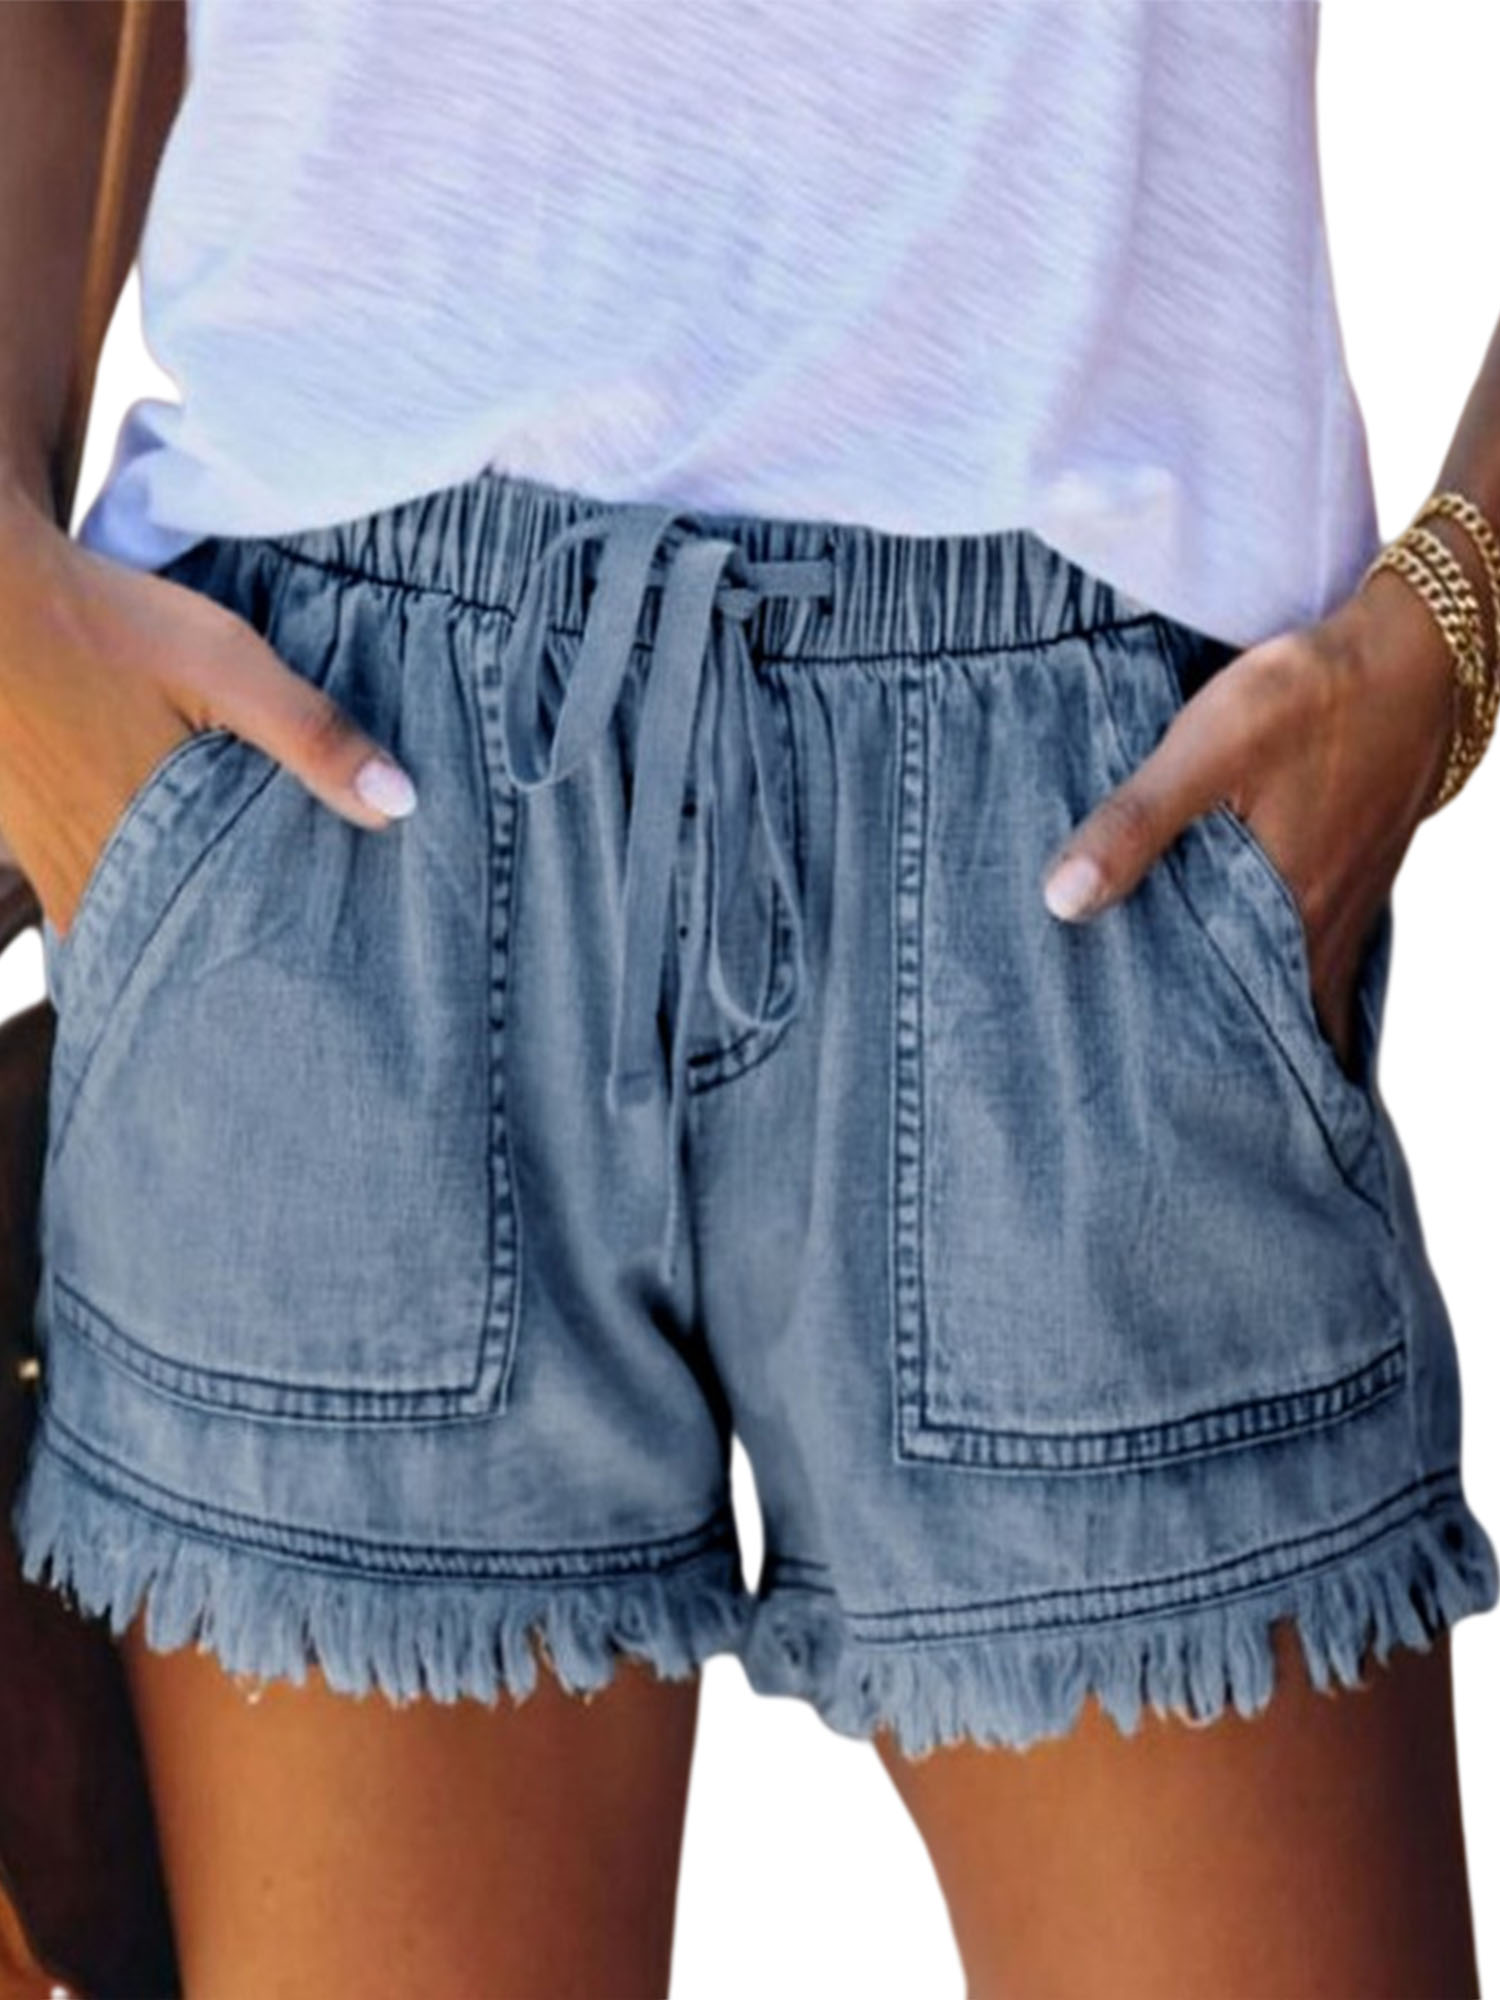 Avamo Beach Casual Hot Shorts For Women Denim Shorts Summer Casual Low Waisted Frayed Raw Hem Ripped Denim Jean Shorts - image 1 of 2